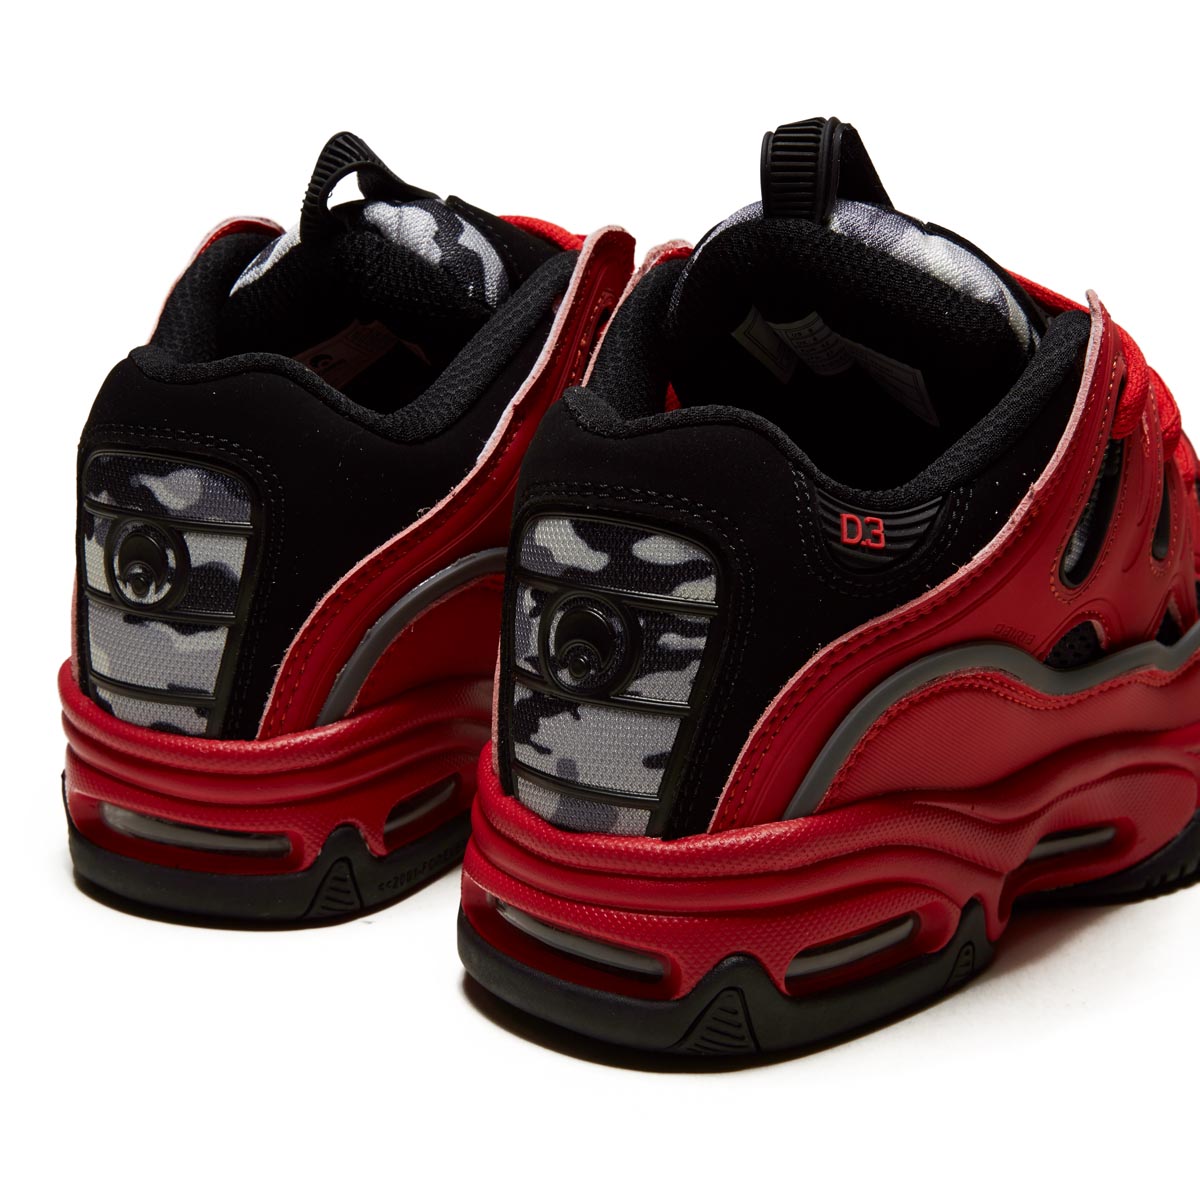 Osiris D3 2001 Shoes - Red/Black/Grey image 5